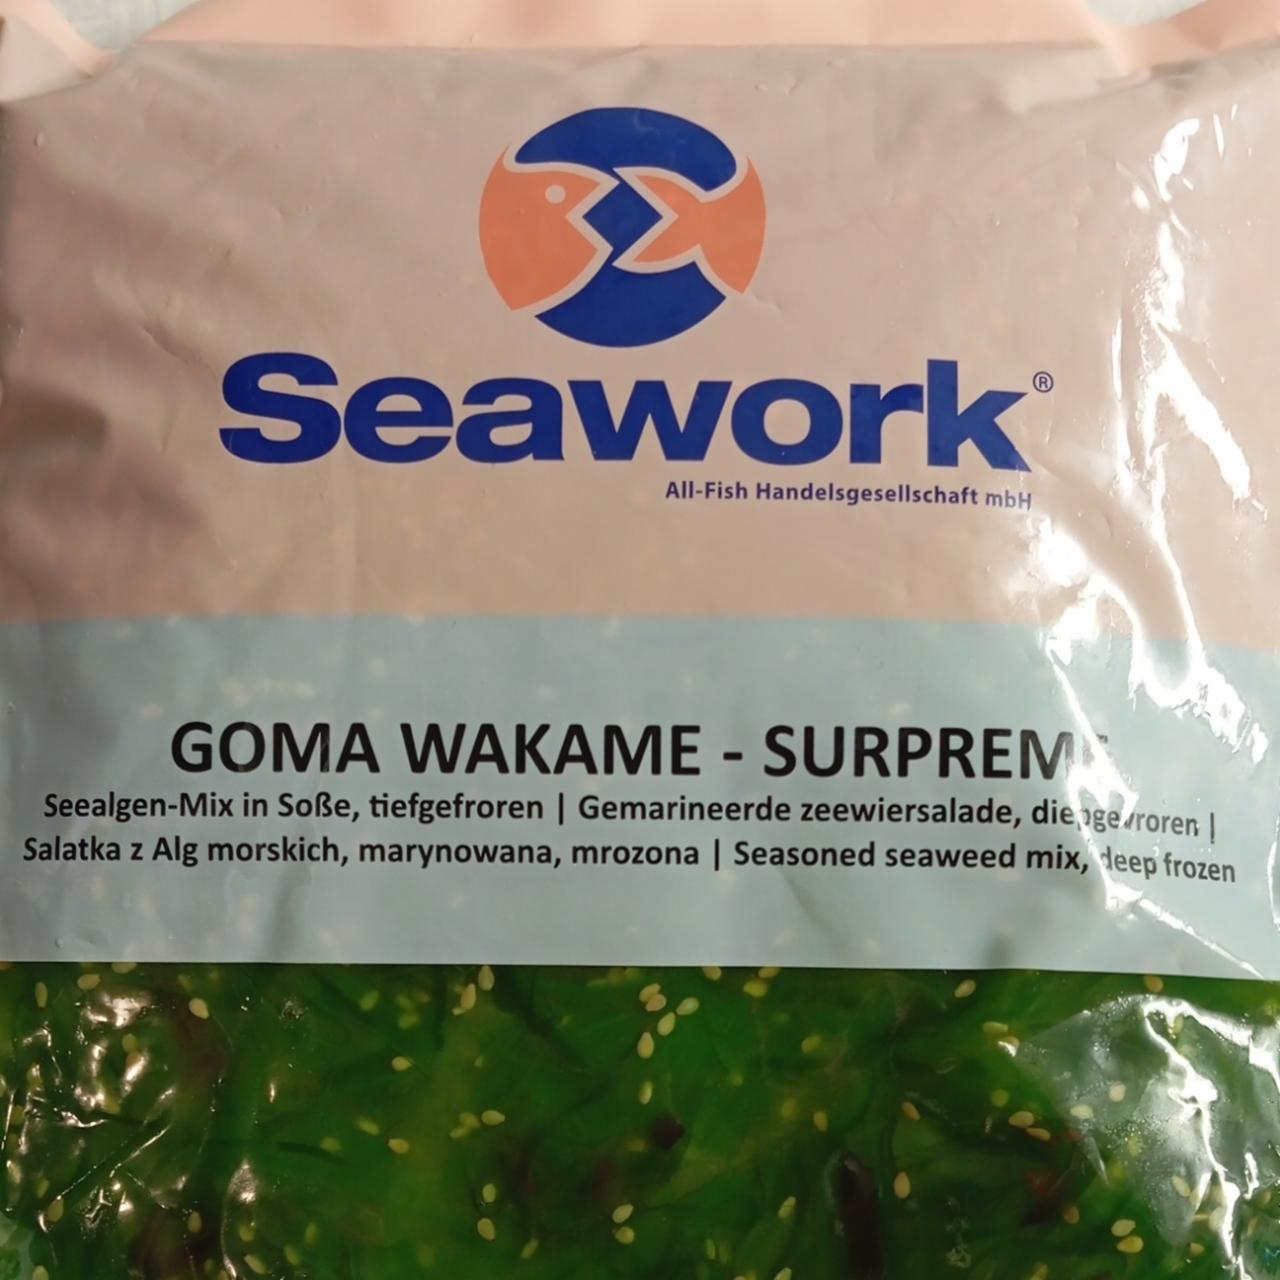 Fotografie - Goma wakame surpreme SeaWork